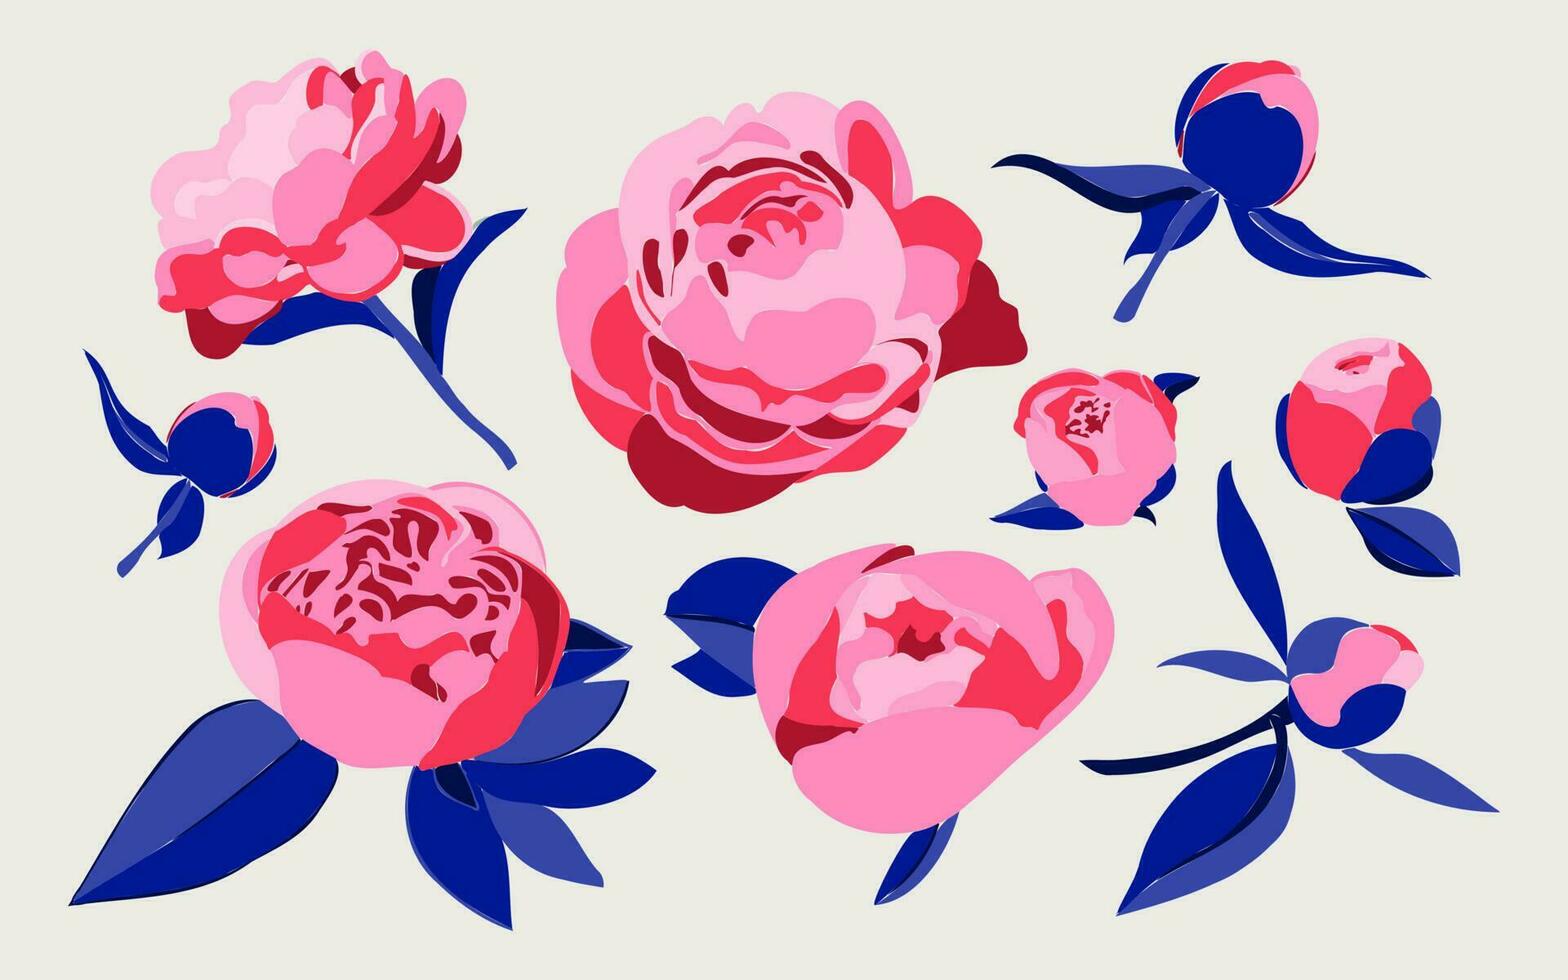 impostato di vario decorativo peonie o Rose isolato su un' bianca sfondo. floreale, botanico concetto. vettore isolato su bianca sfondo. rosa, rosso, blu.